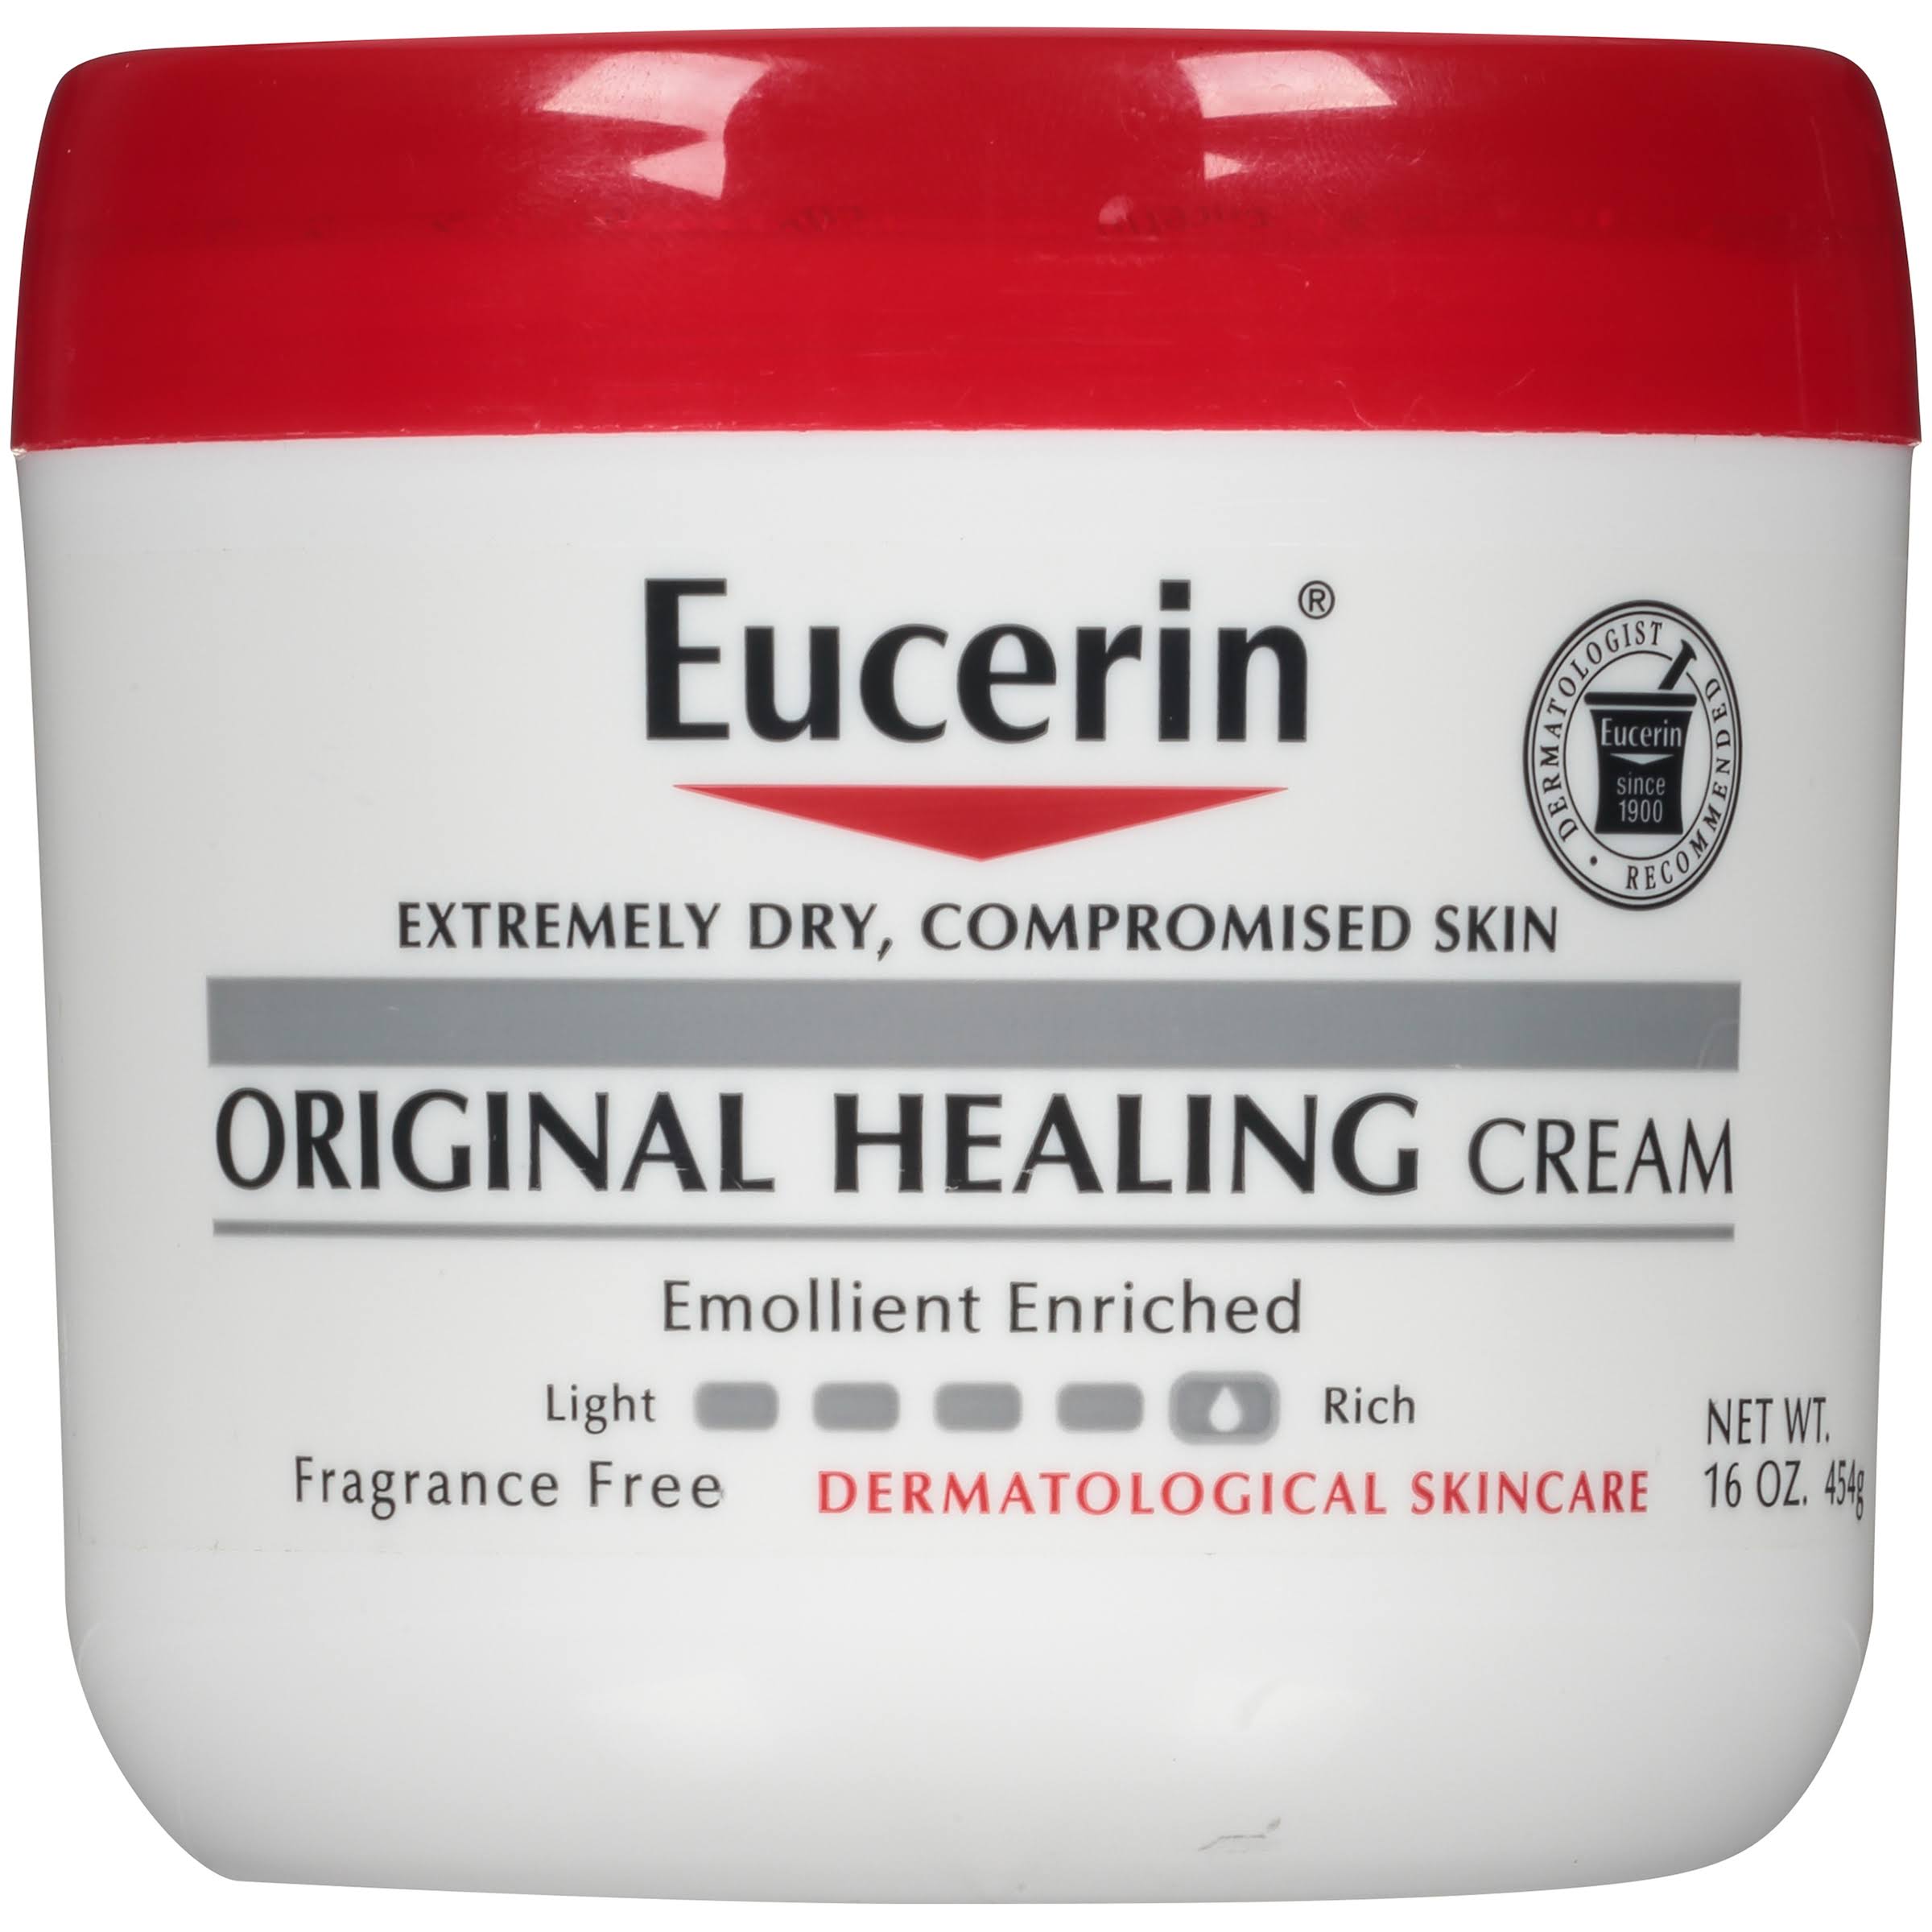 Eucerin Original Healing Creme - 16oz